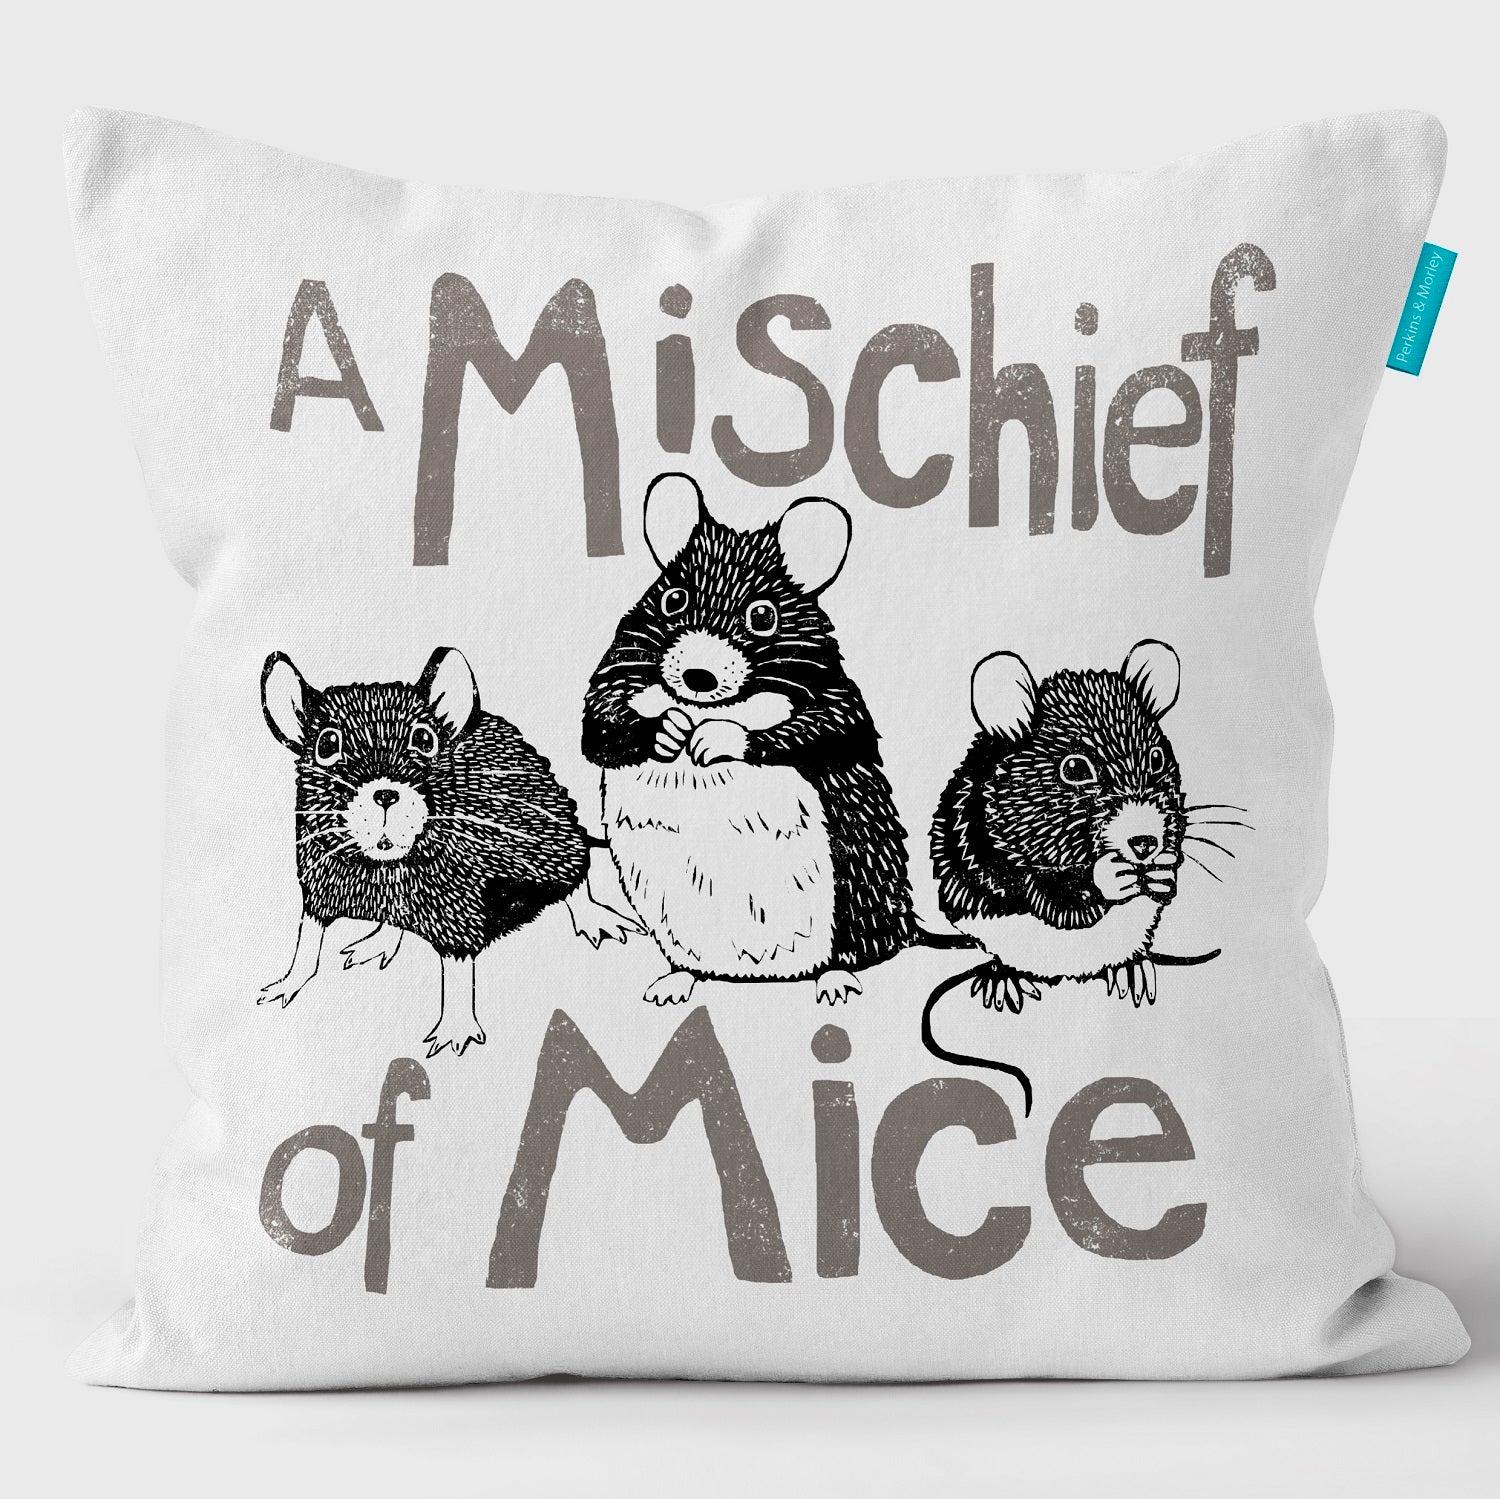 Mischief of Mice - Collective Noun Cushion